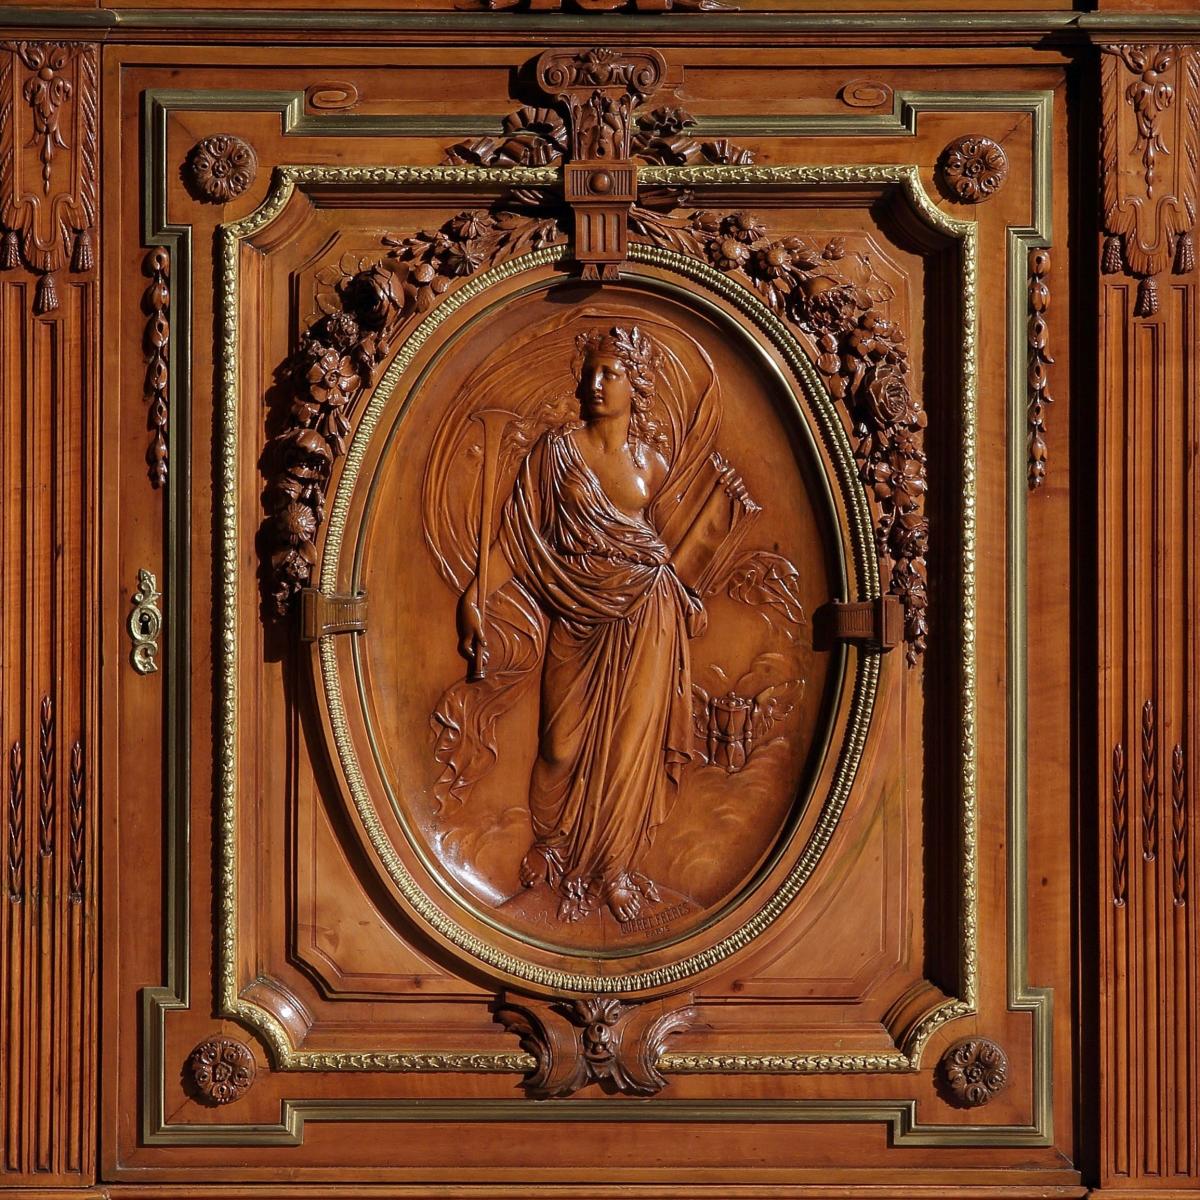 Exhibition-Quality Cabinet By Maison Guéret of Paris